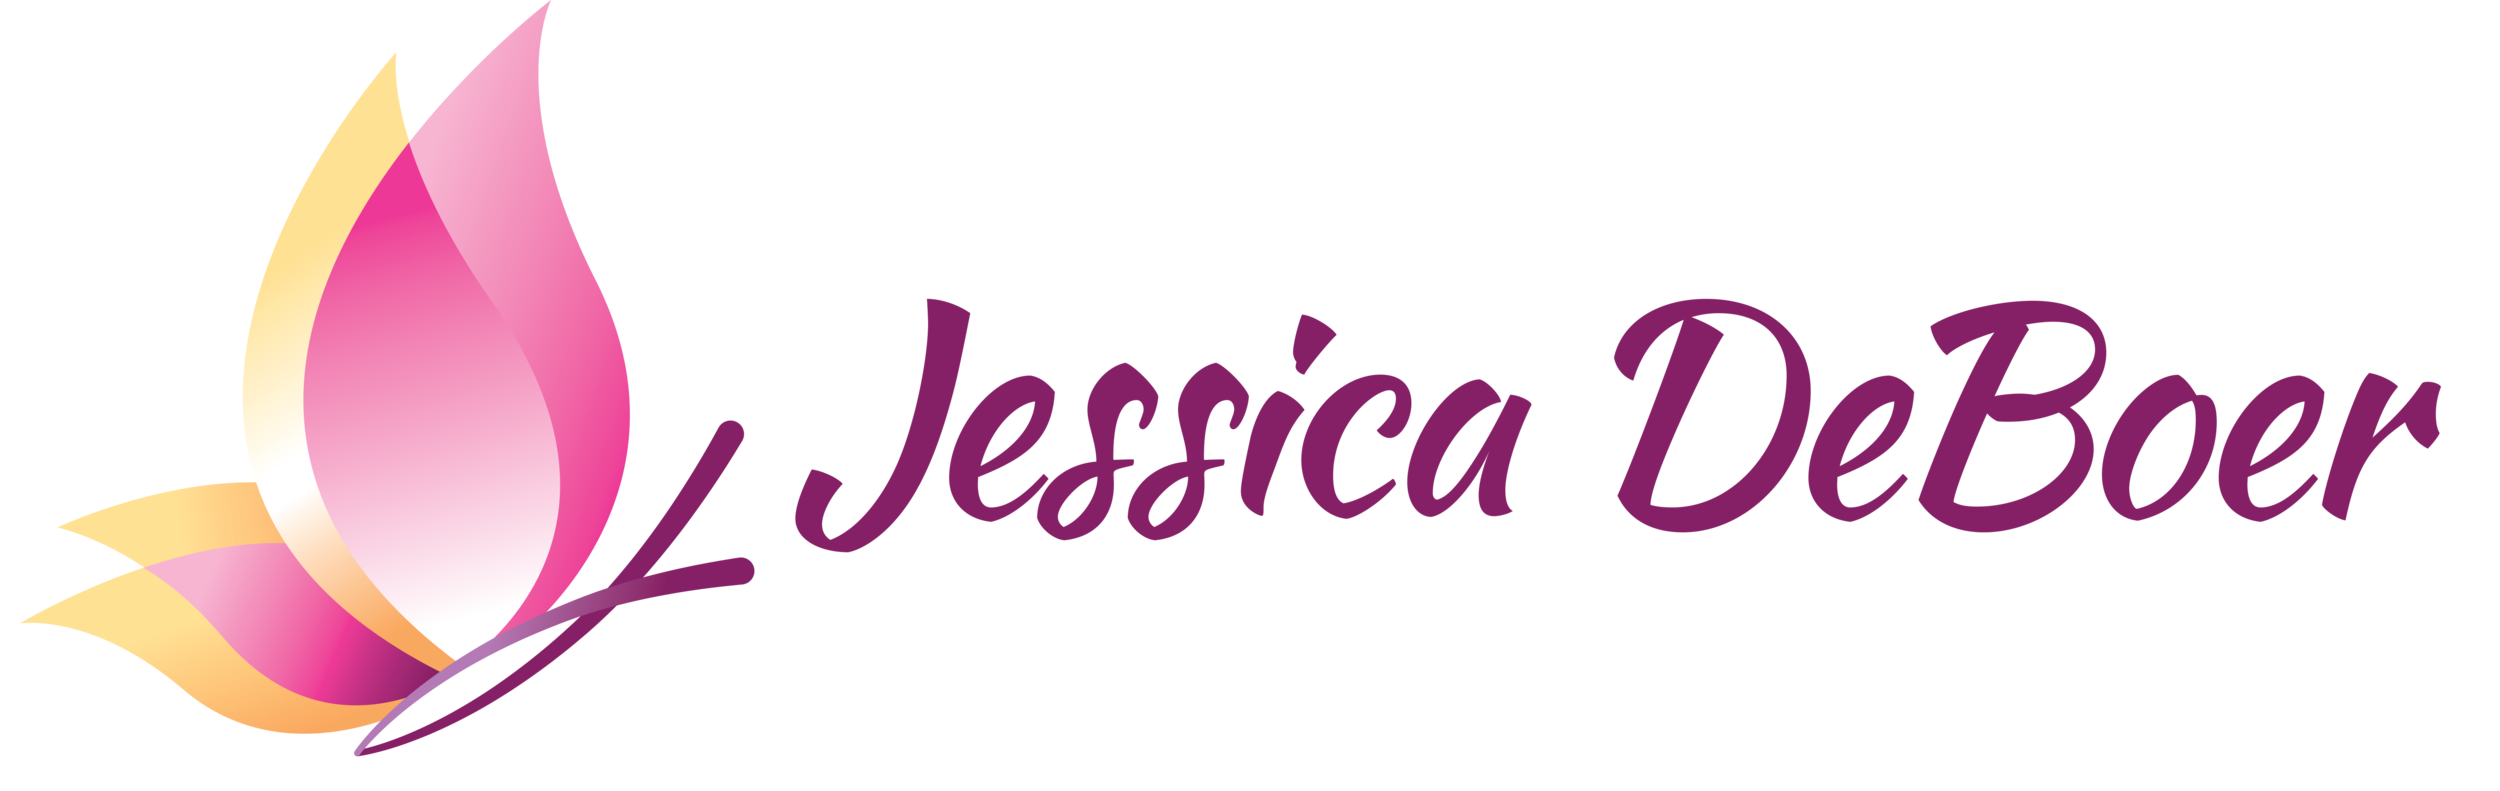 Jessica DeBoer